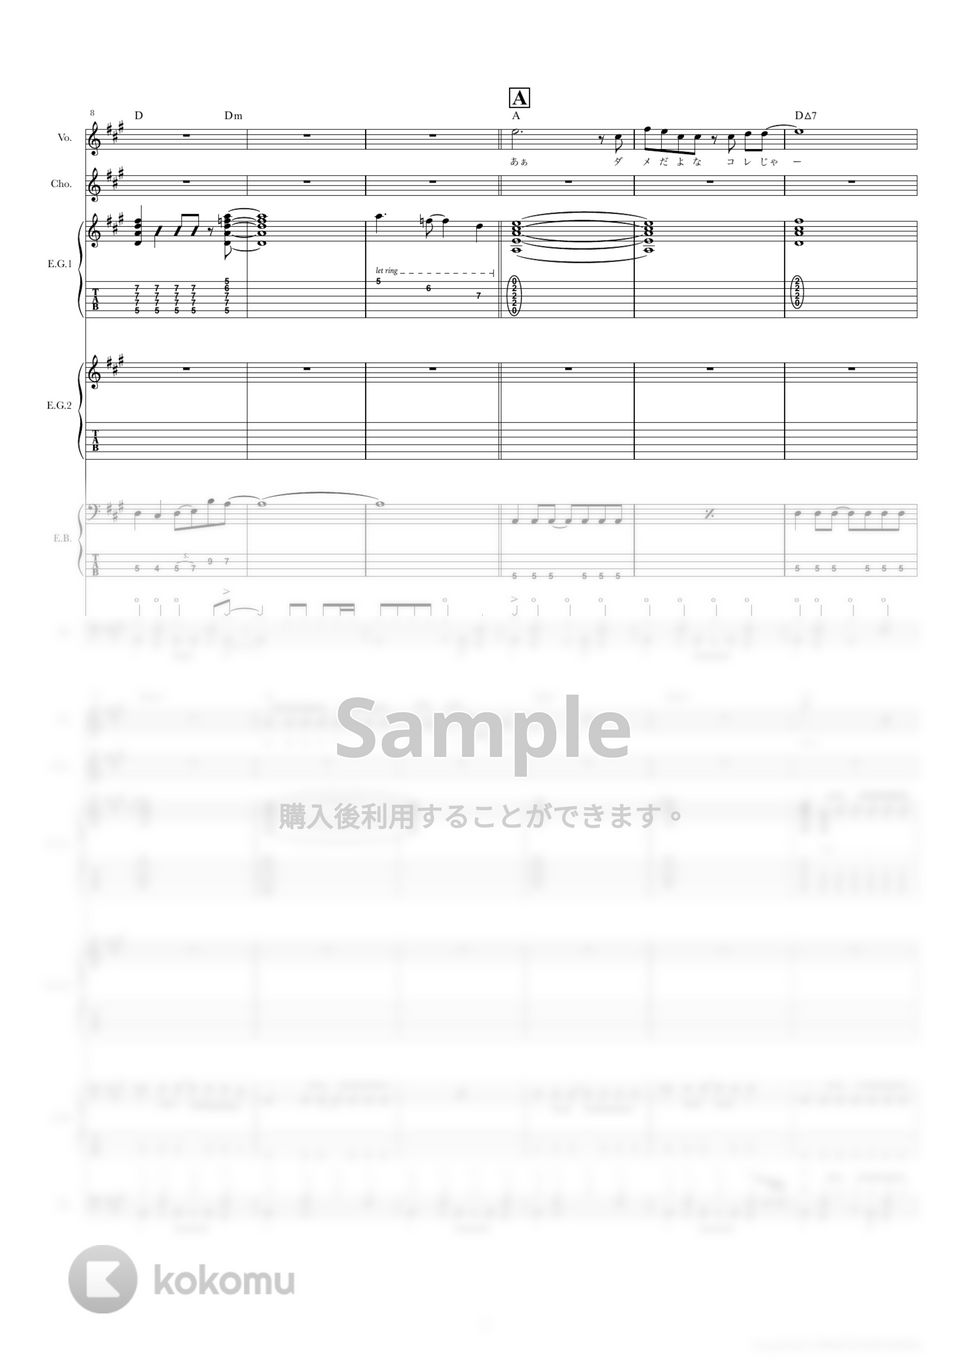 Hump Back - 今日が終わってく (バンドスコア) by TRIAD GUITAR SCHOOL